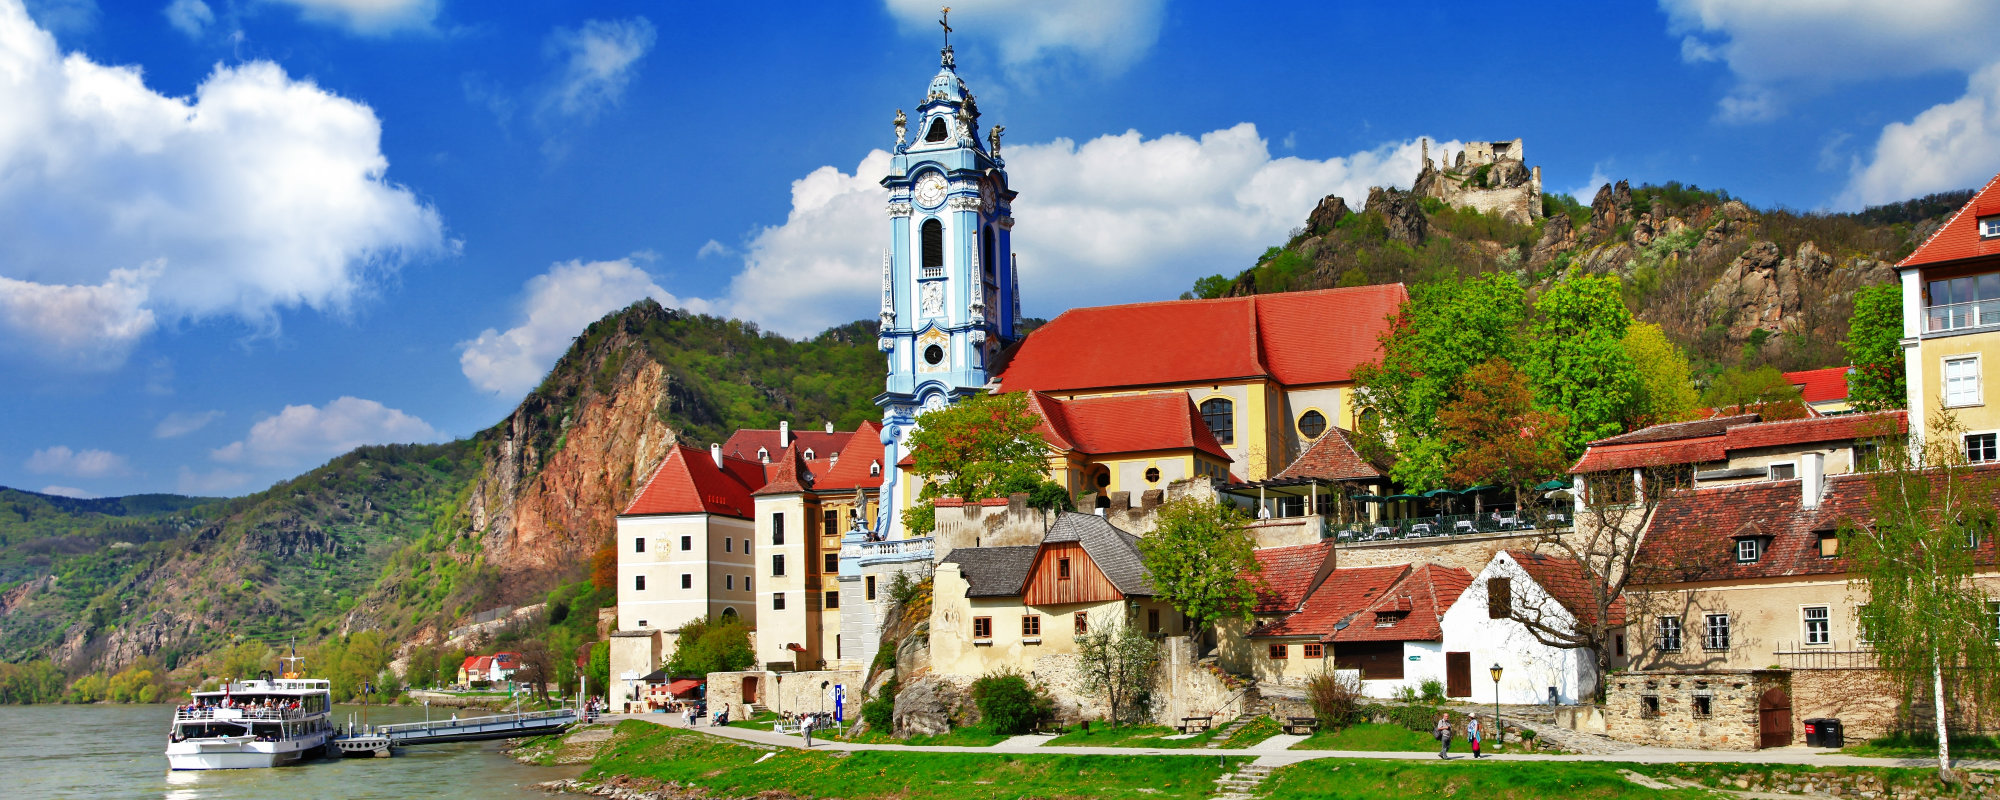 Danube valley WachauA